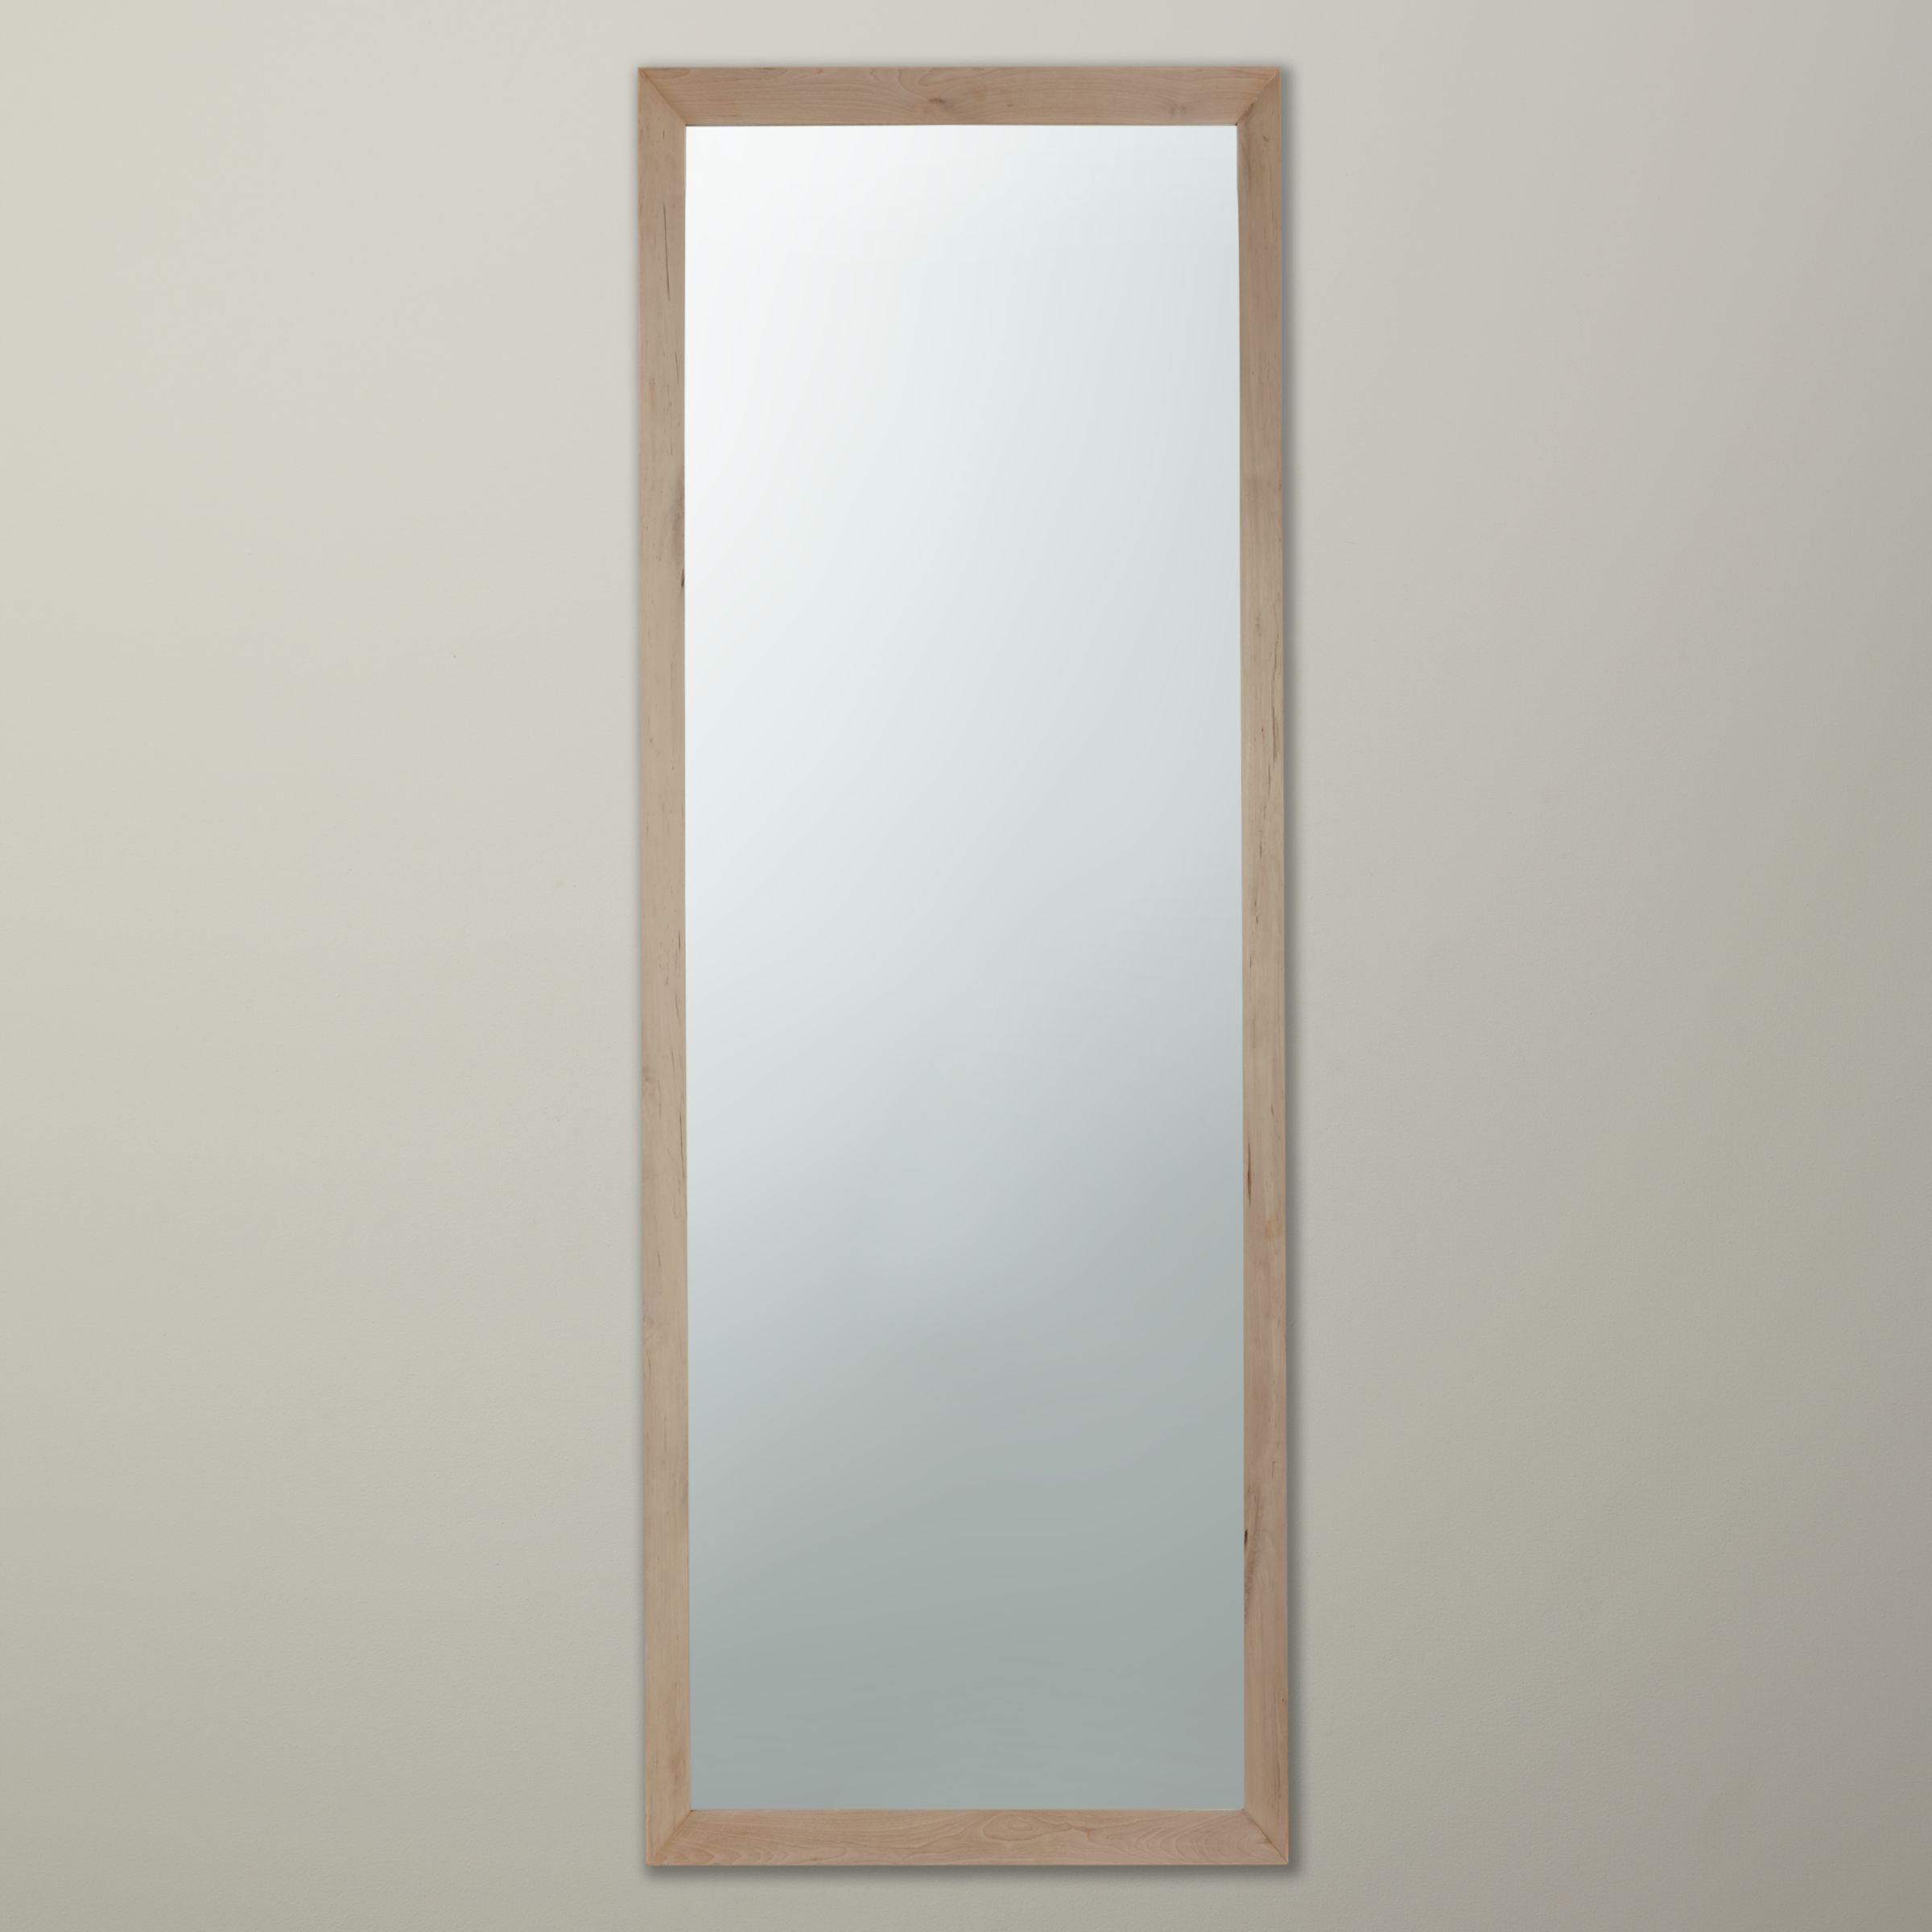 John Lewis & Partners Scandi White Edge Full Length Mirror, 125 x 45cm